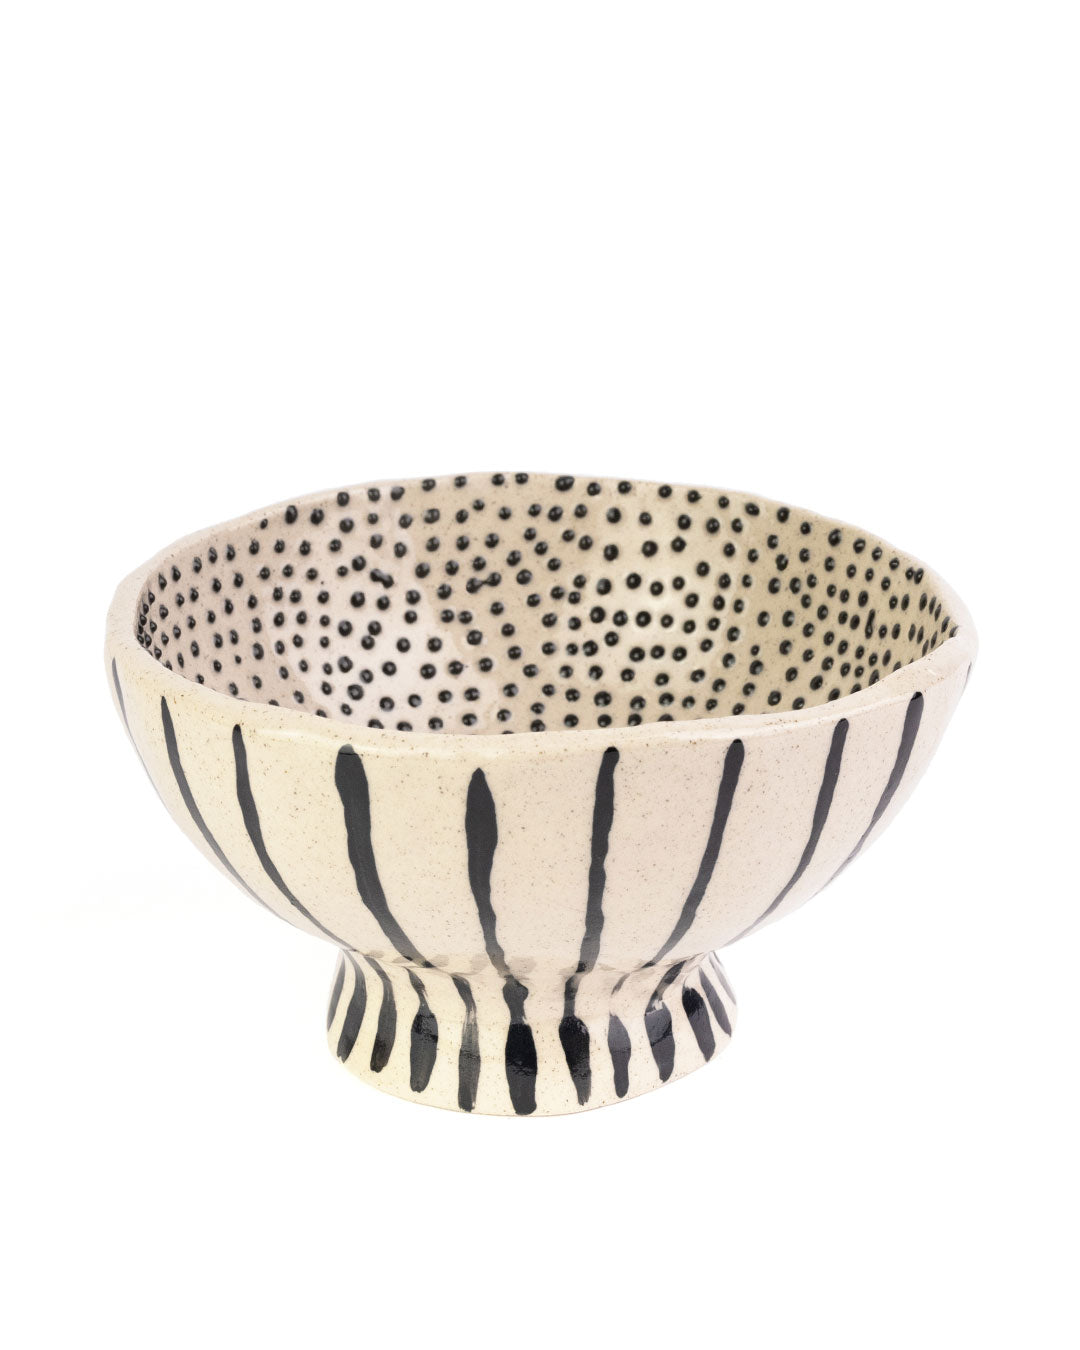 Irregular bowl pottery Alice Del Ferraro